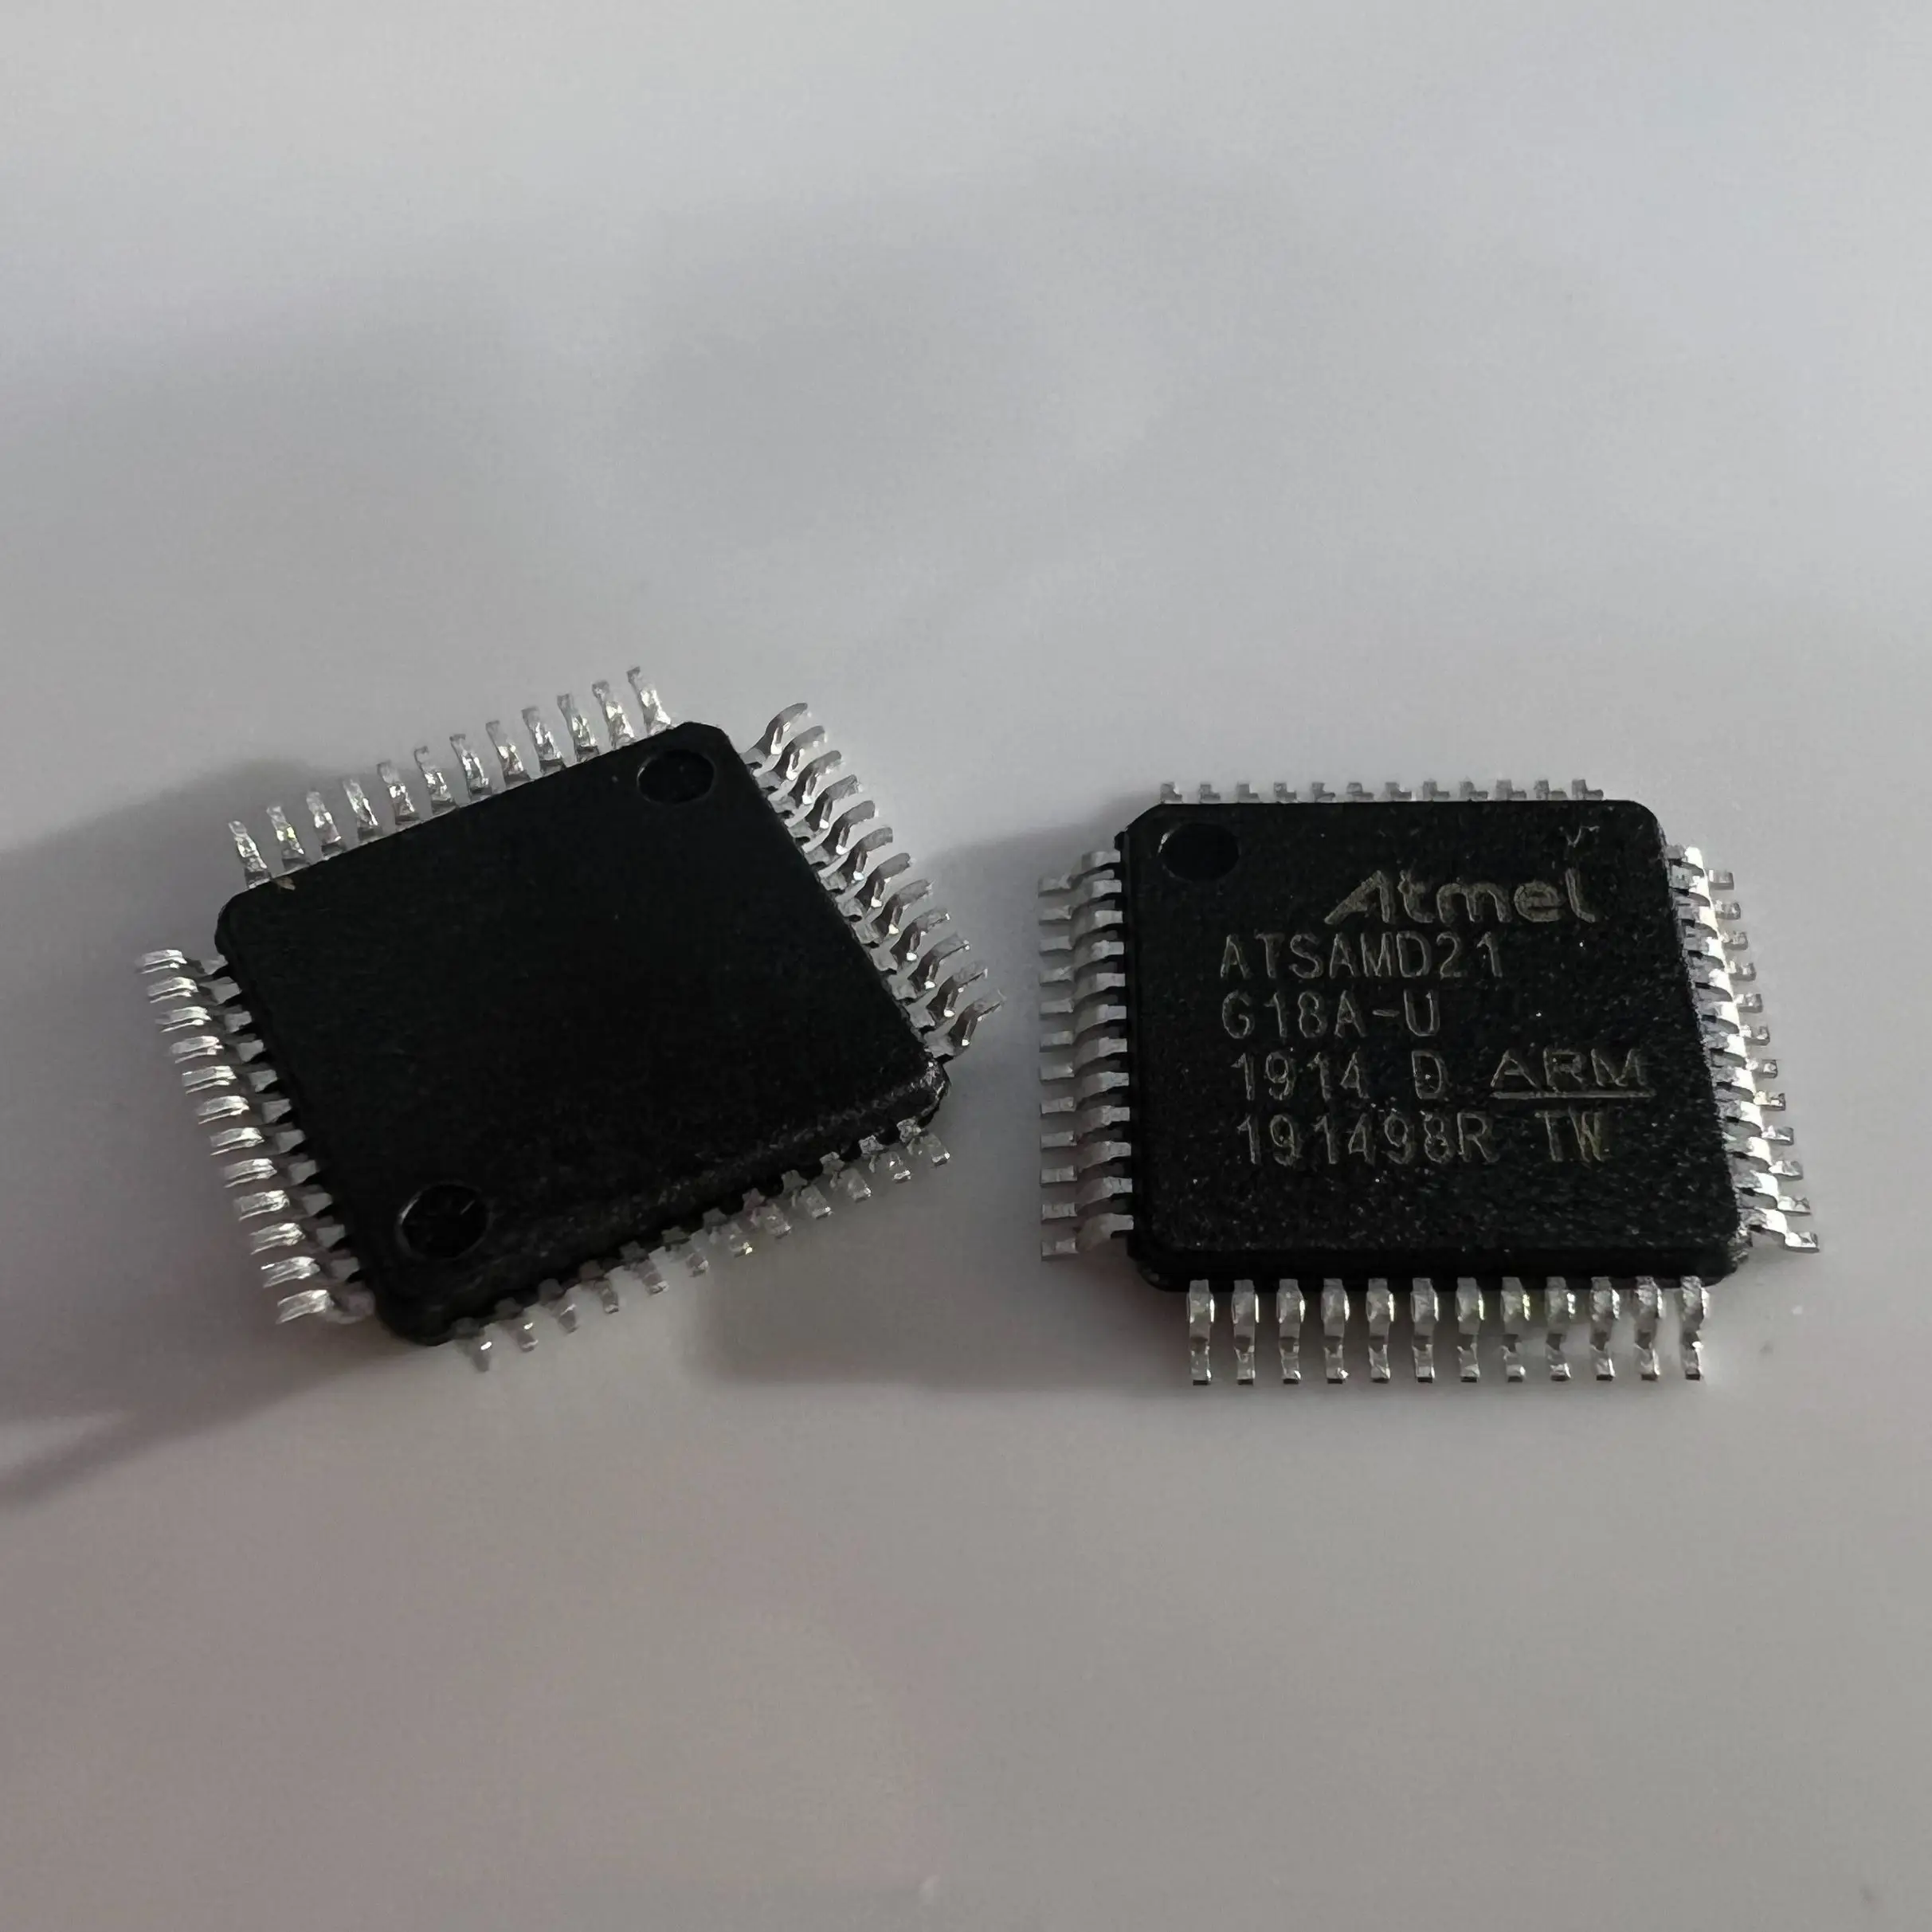 

1PCS/LOTE ATSAMD21G18A-AU Package TQFP-48 New Original Genuine Processor/microcontroller IC Chip